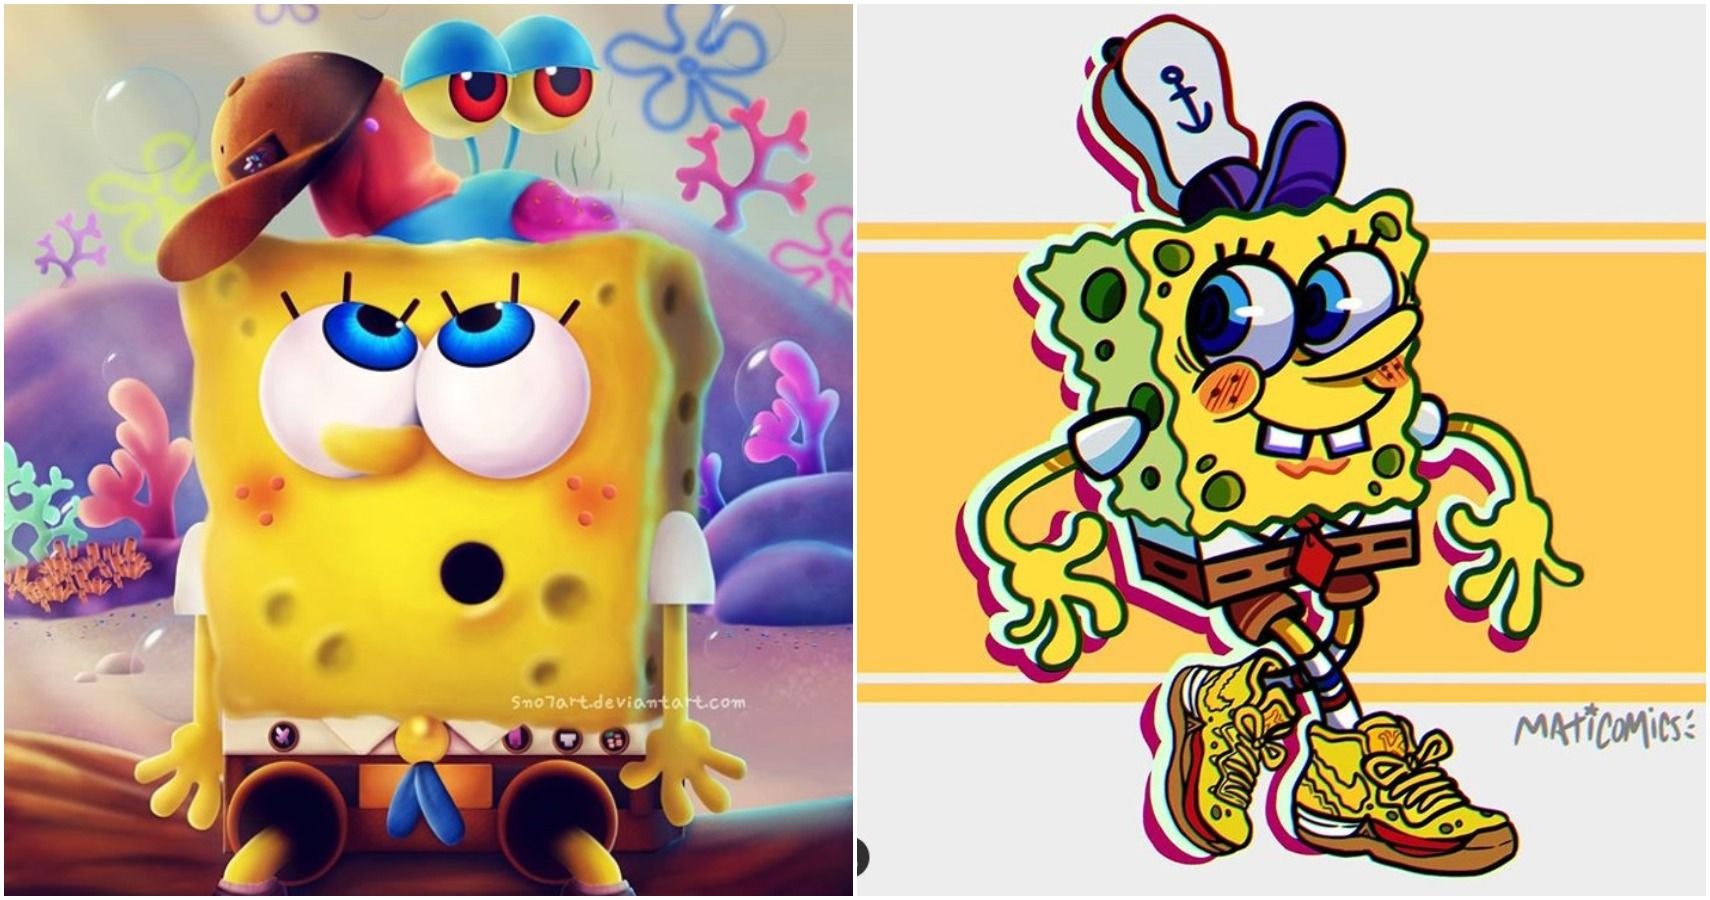 Spongebob Squarepants 10 Fan Art Pieces Of Spongebob That Are Awesome